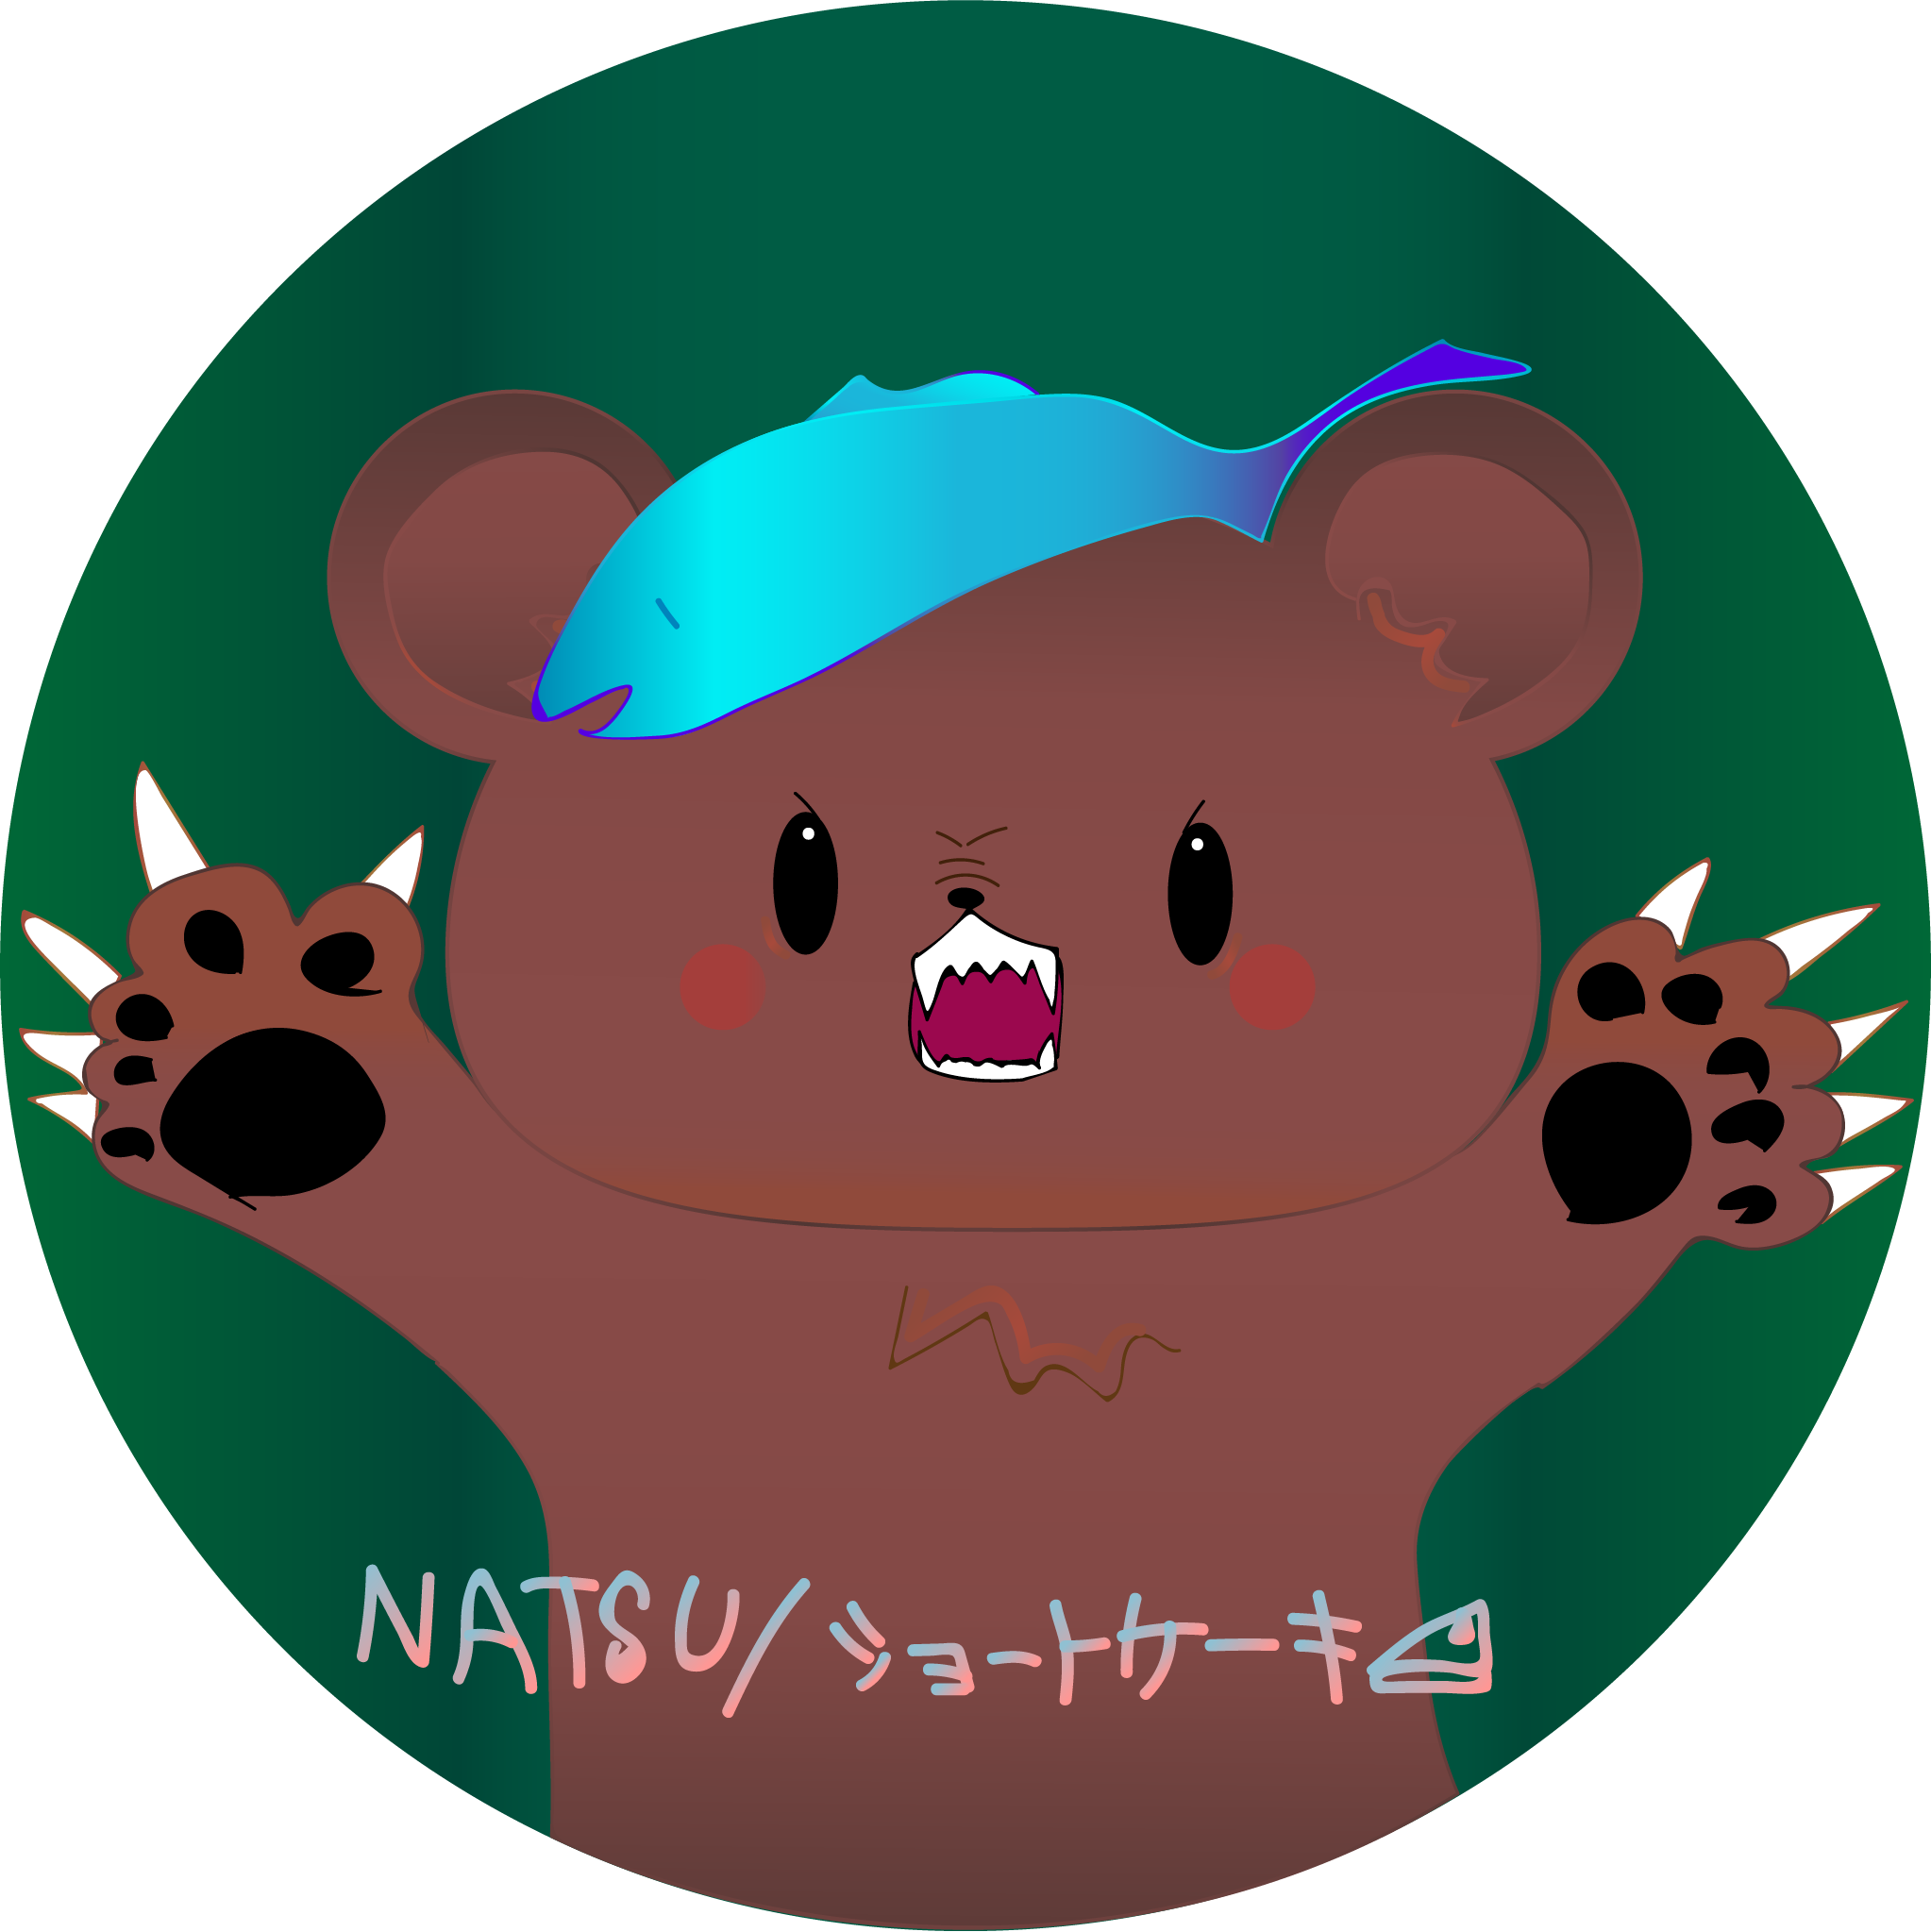 NATSU/ショートケーキ